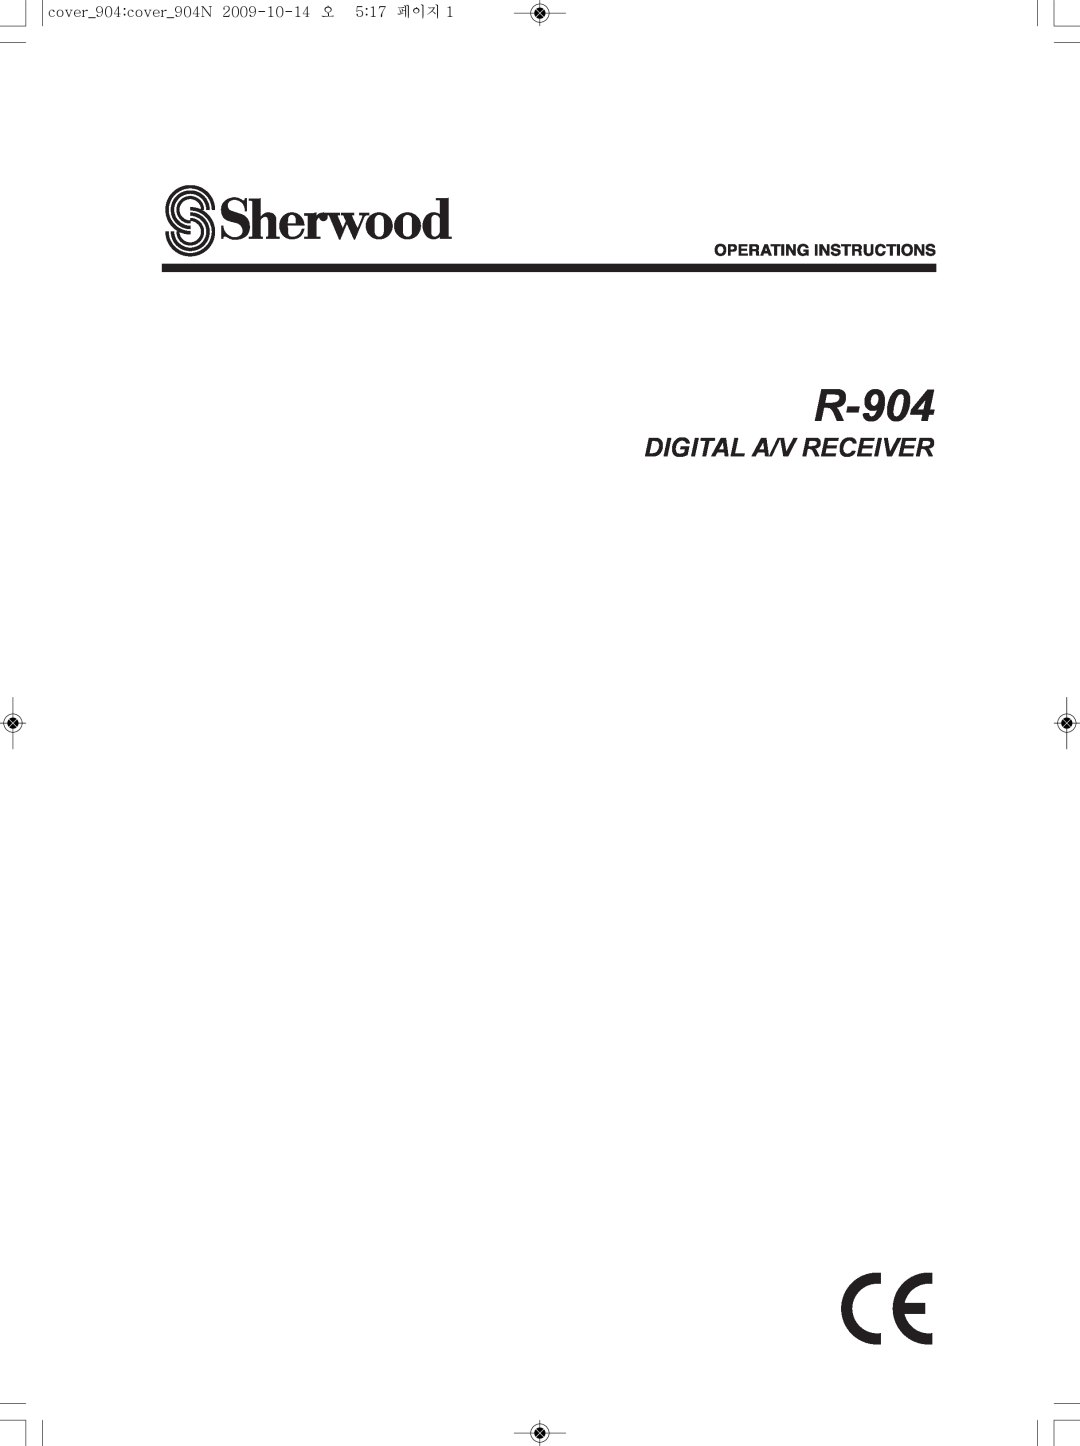 Sherwood R-904 manual Digital A/V Receiver 